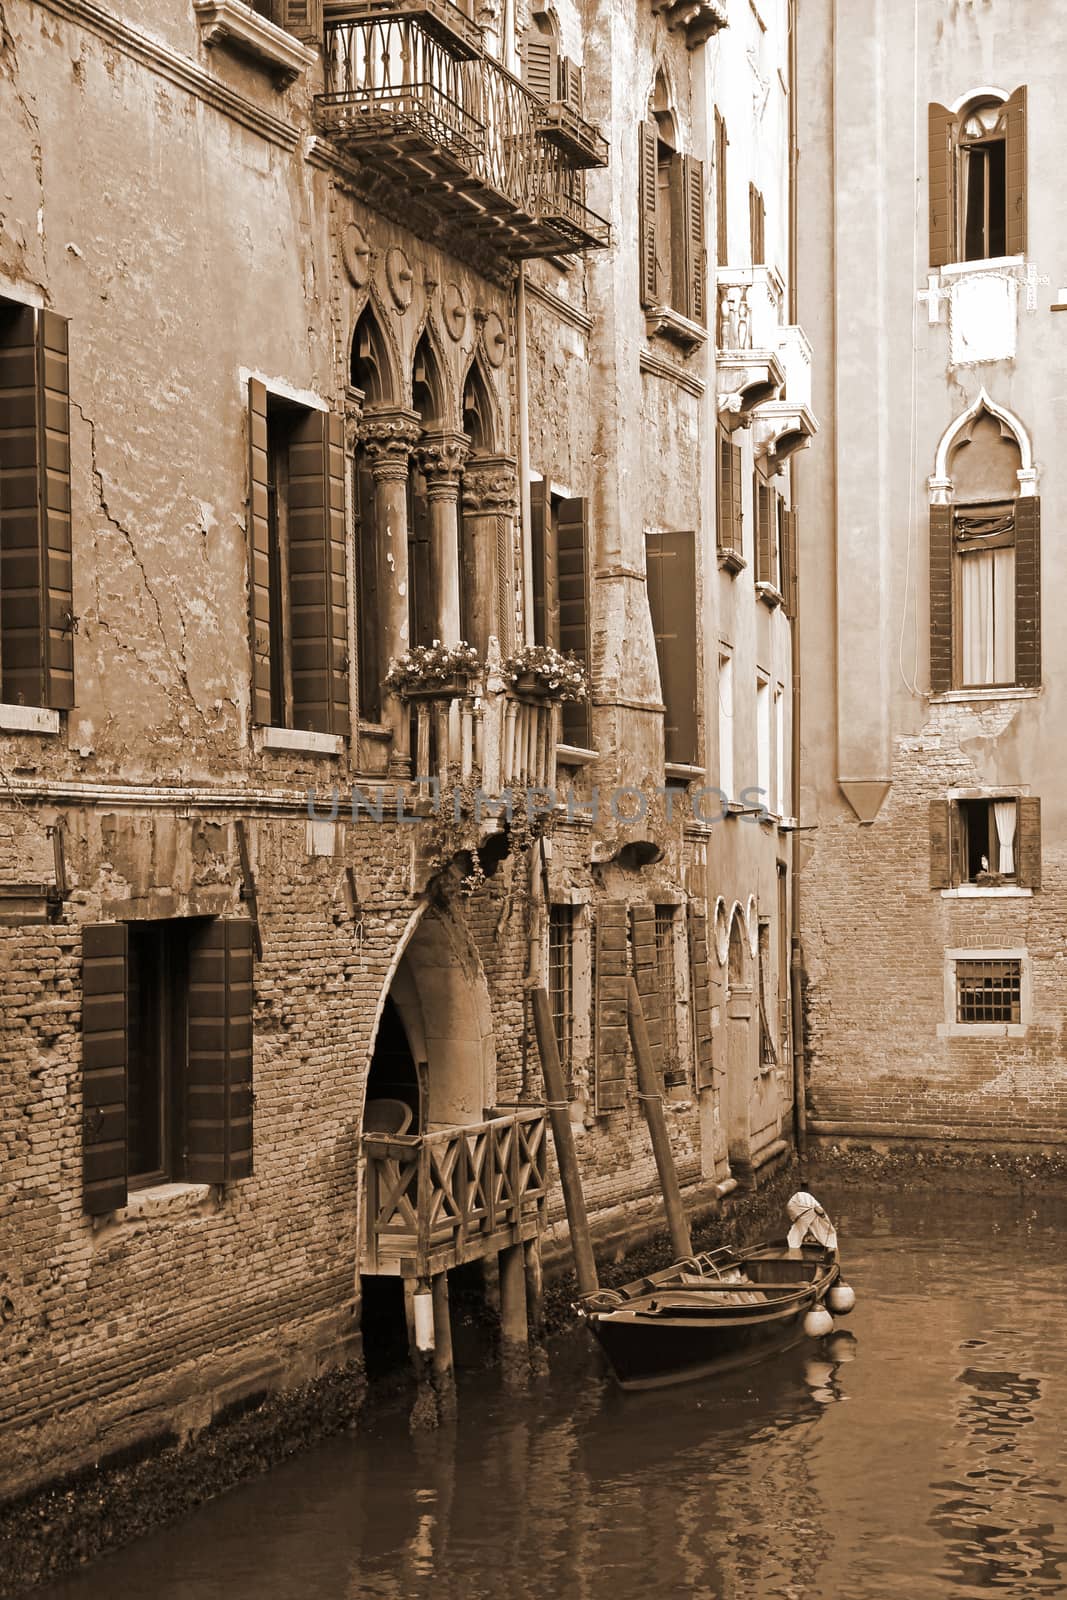 Italy. Venice. Romantic canal. In Sepia toned. Retro style by oxanatravel